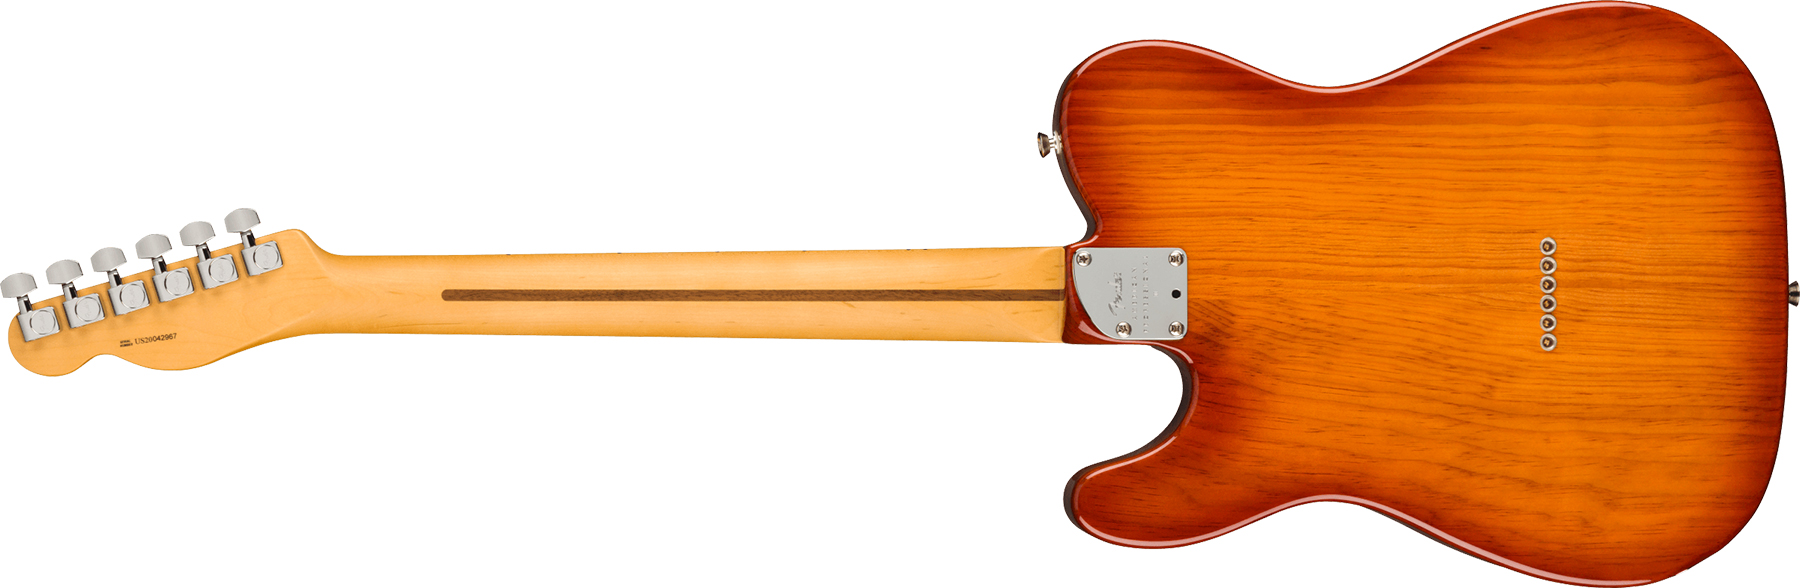 Fender Tele American Professional Ii Usa Mn - Sienna Sunburst - E-Gitarre in Teleform - Variation 1